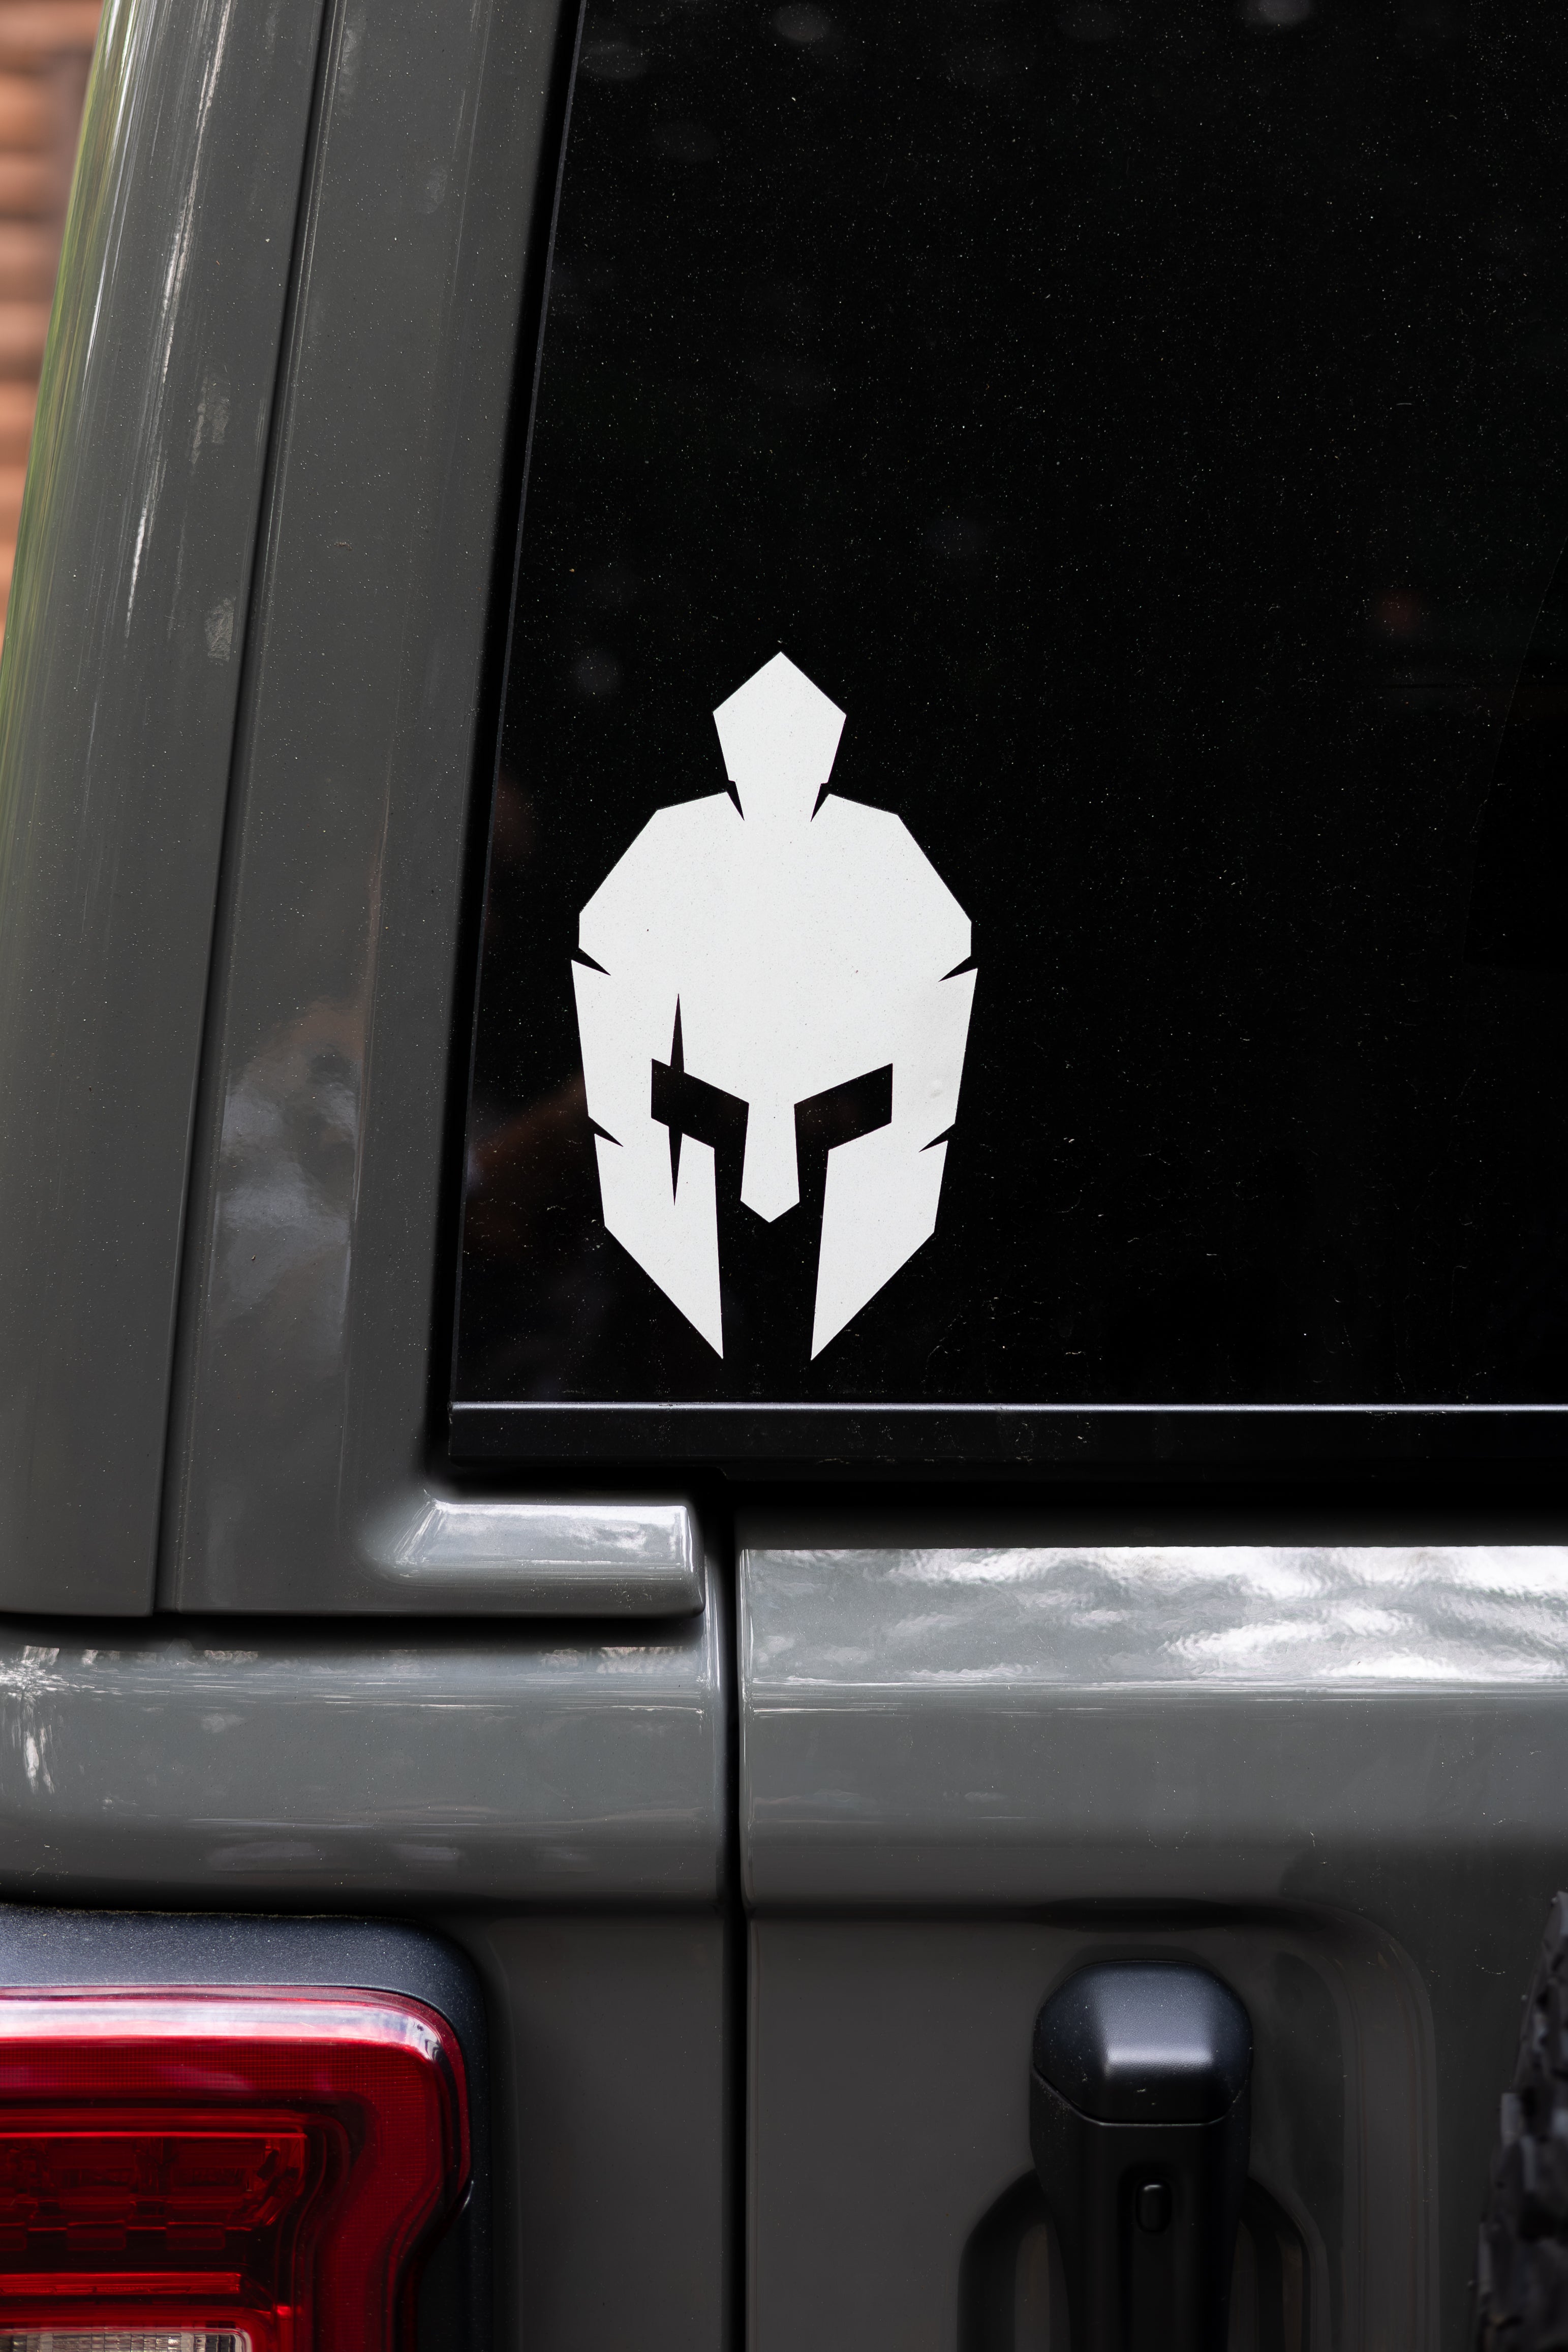 Strength of One spartan warrior helmet sticker on rear glass of vehicle